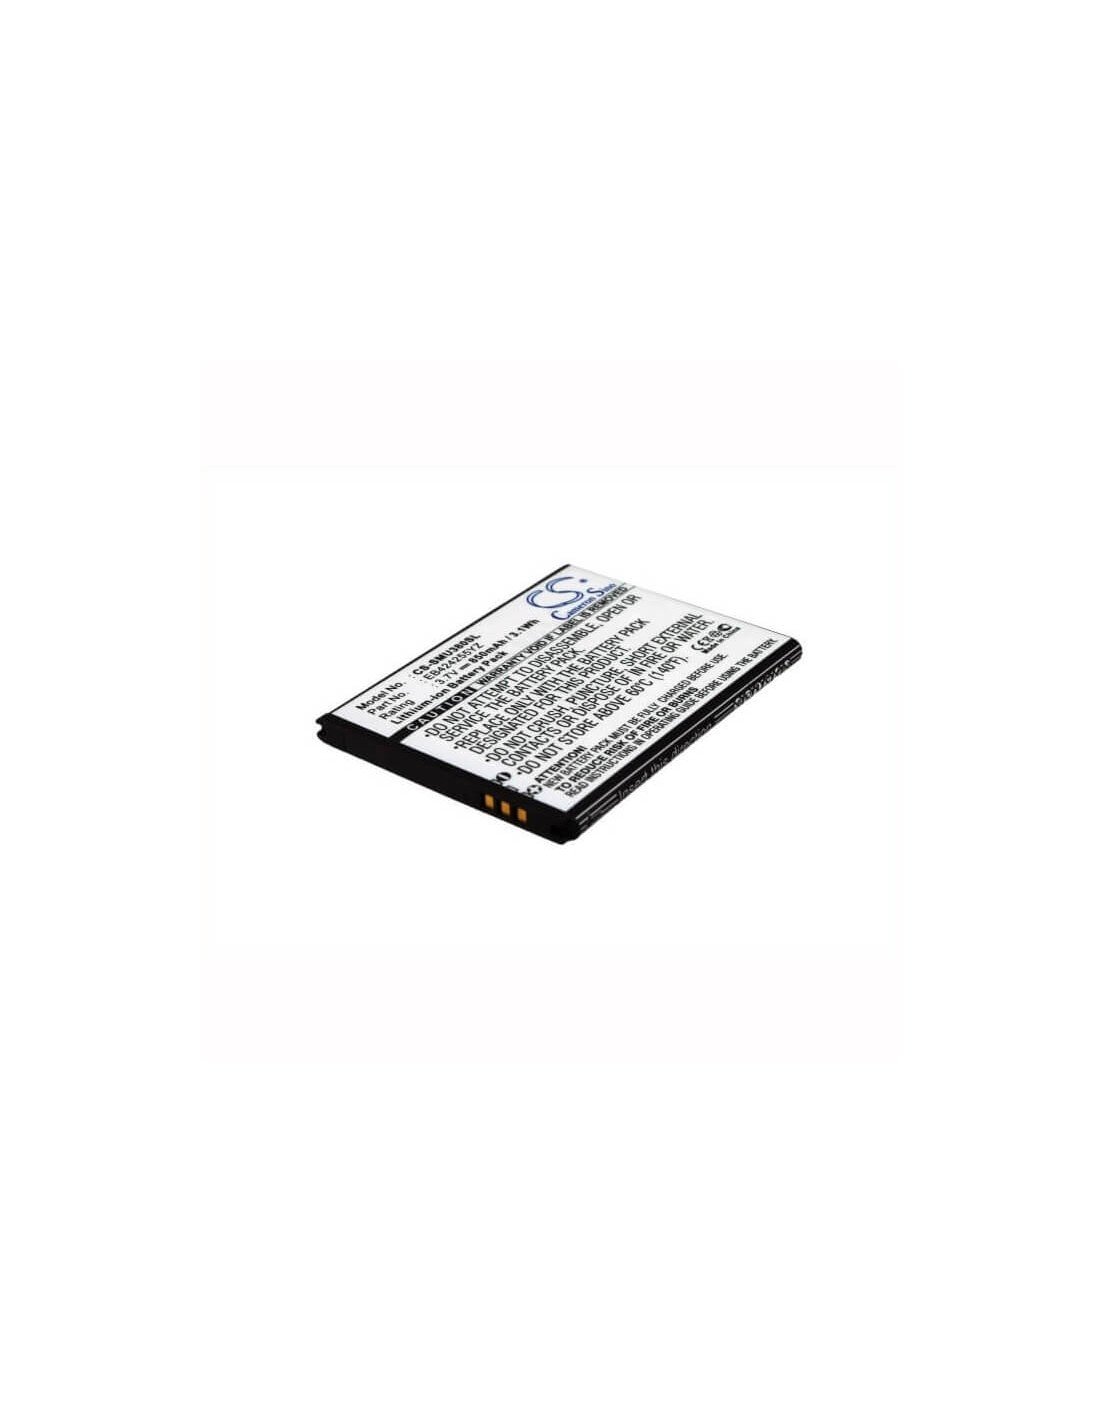 Battery for Samsung SCH-U380, Brightside, SCHU380HKV 3.7V, 850mAh - 3.15Wh